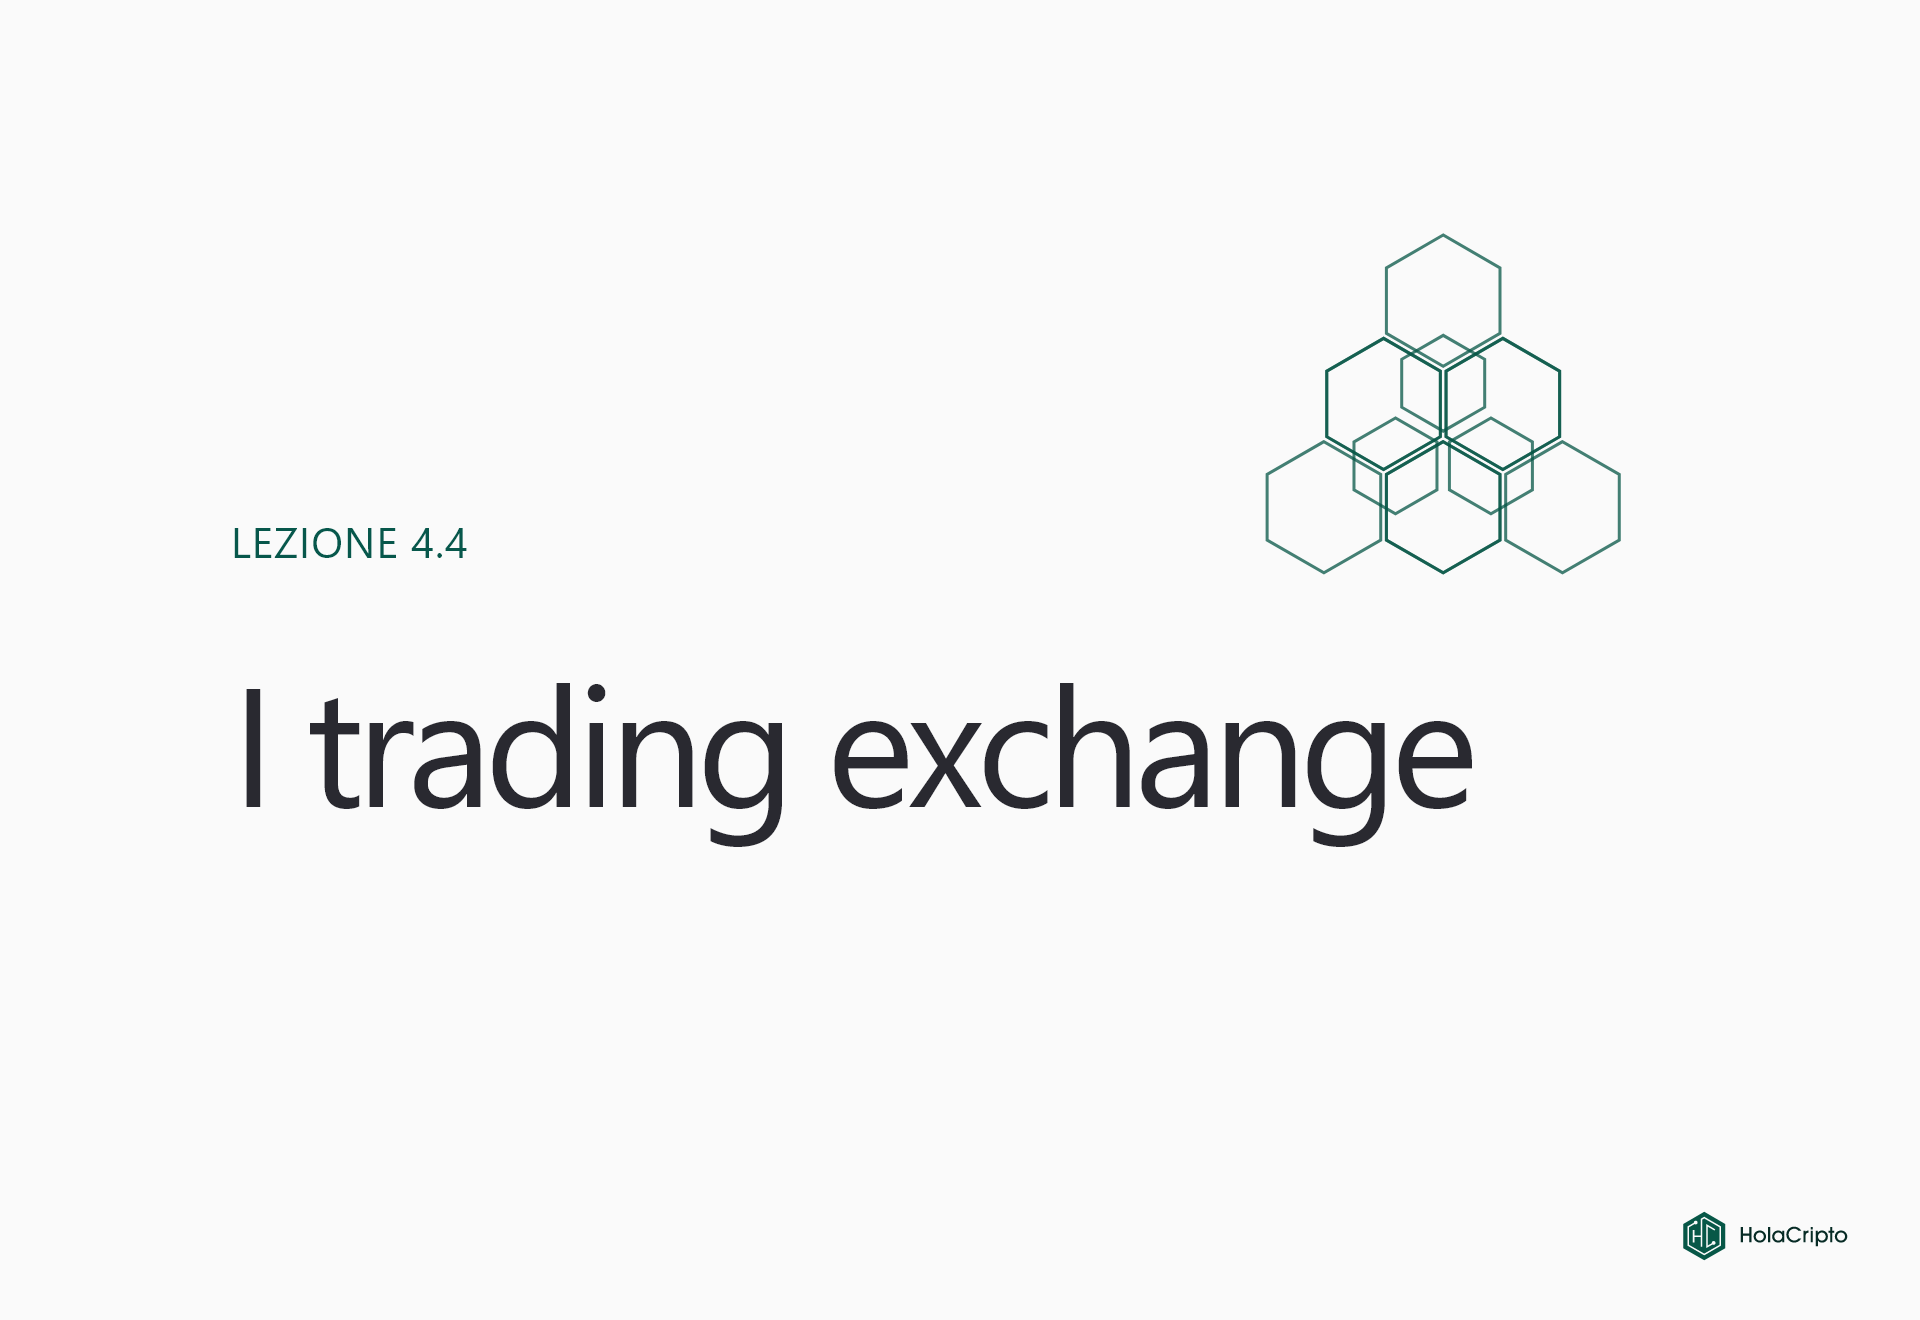 Cosa sono i trading exchange?